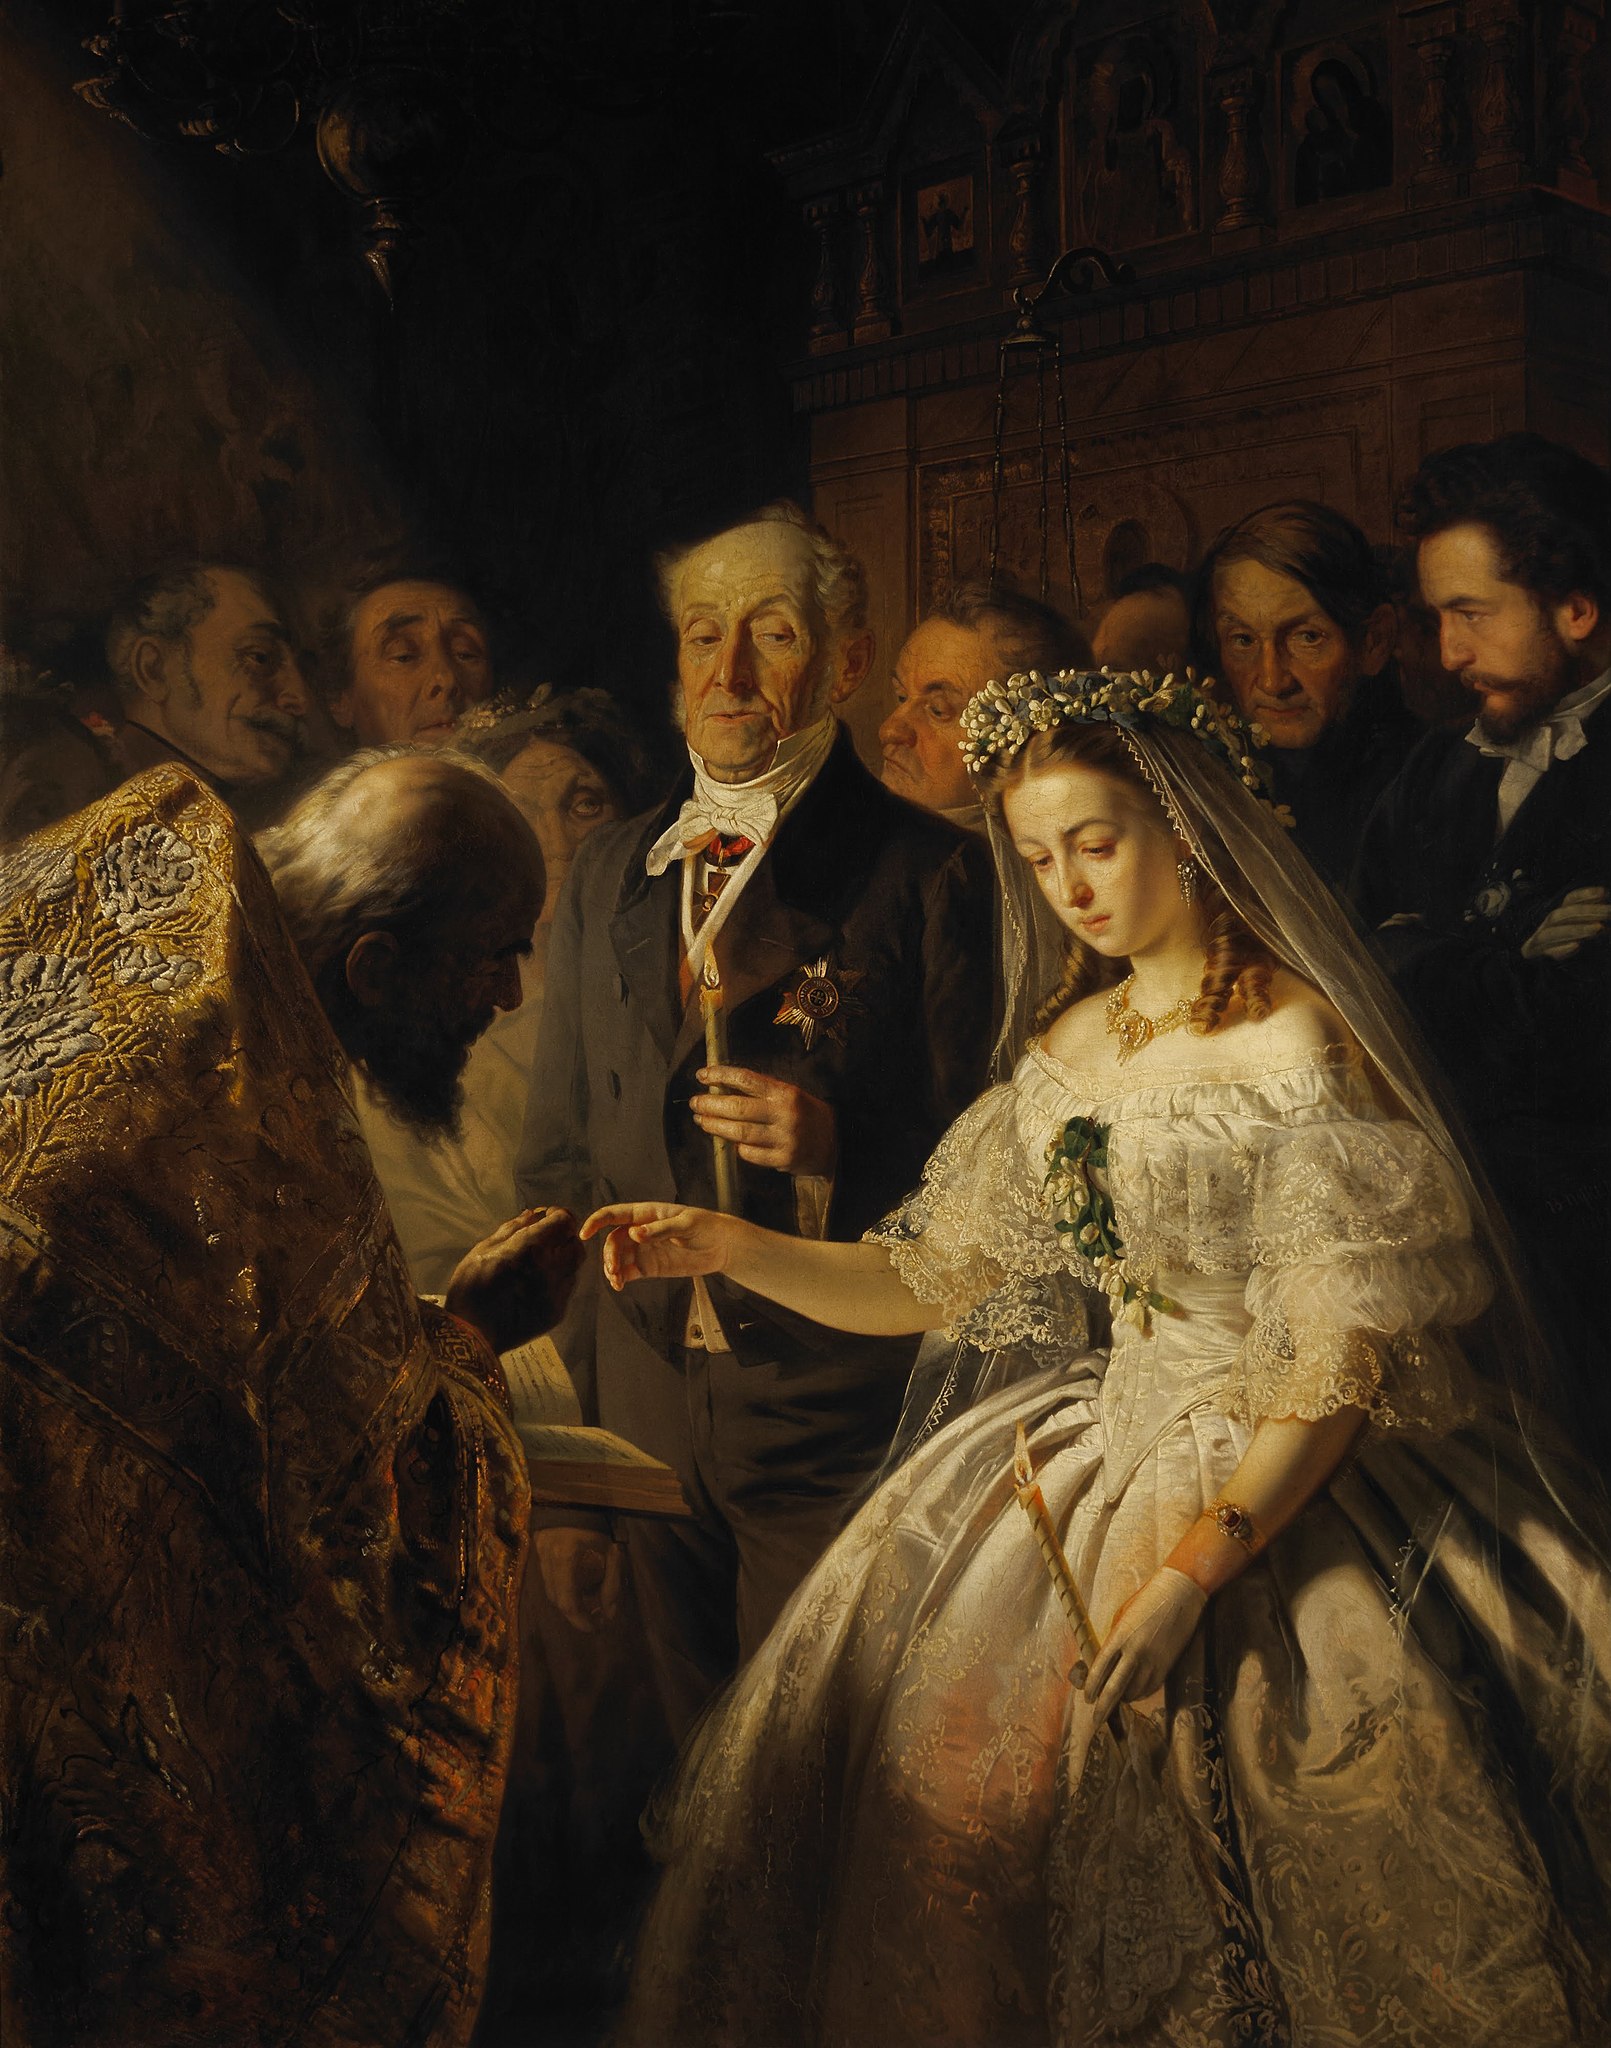 Vasili Pukirev, Unequal Marriage, 1862, Tretyakov Gallery, Moscow, Russia.